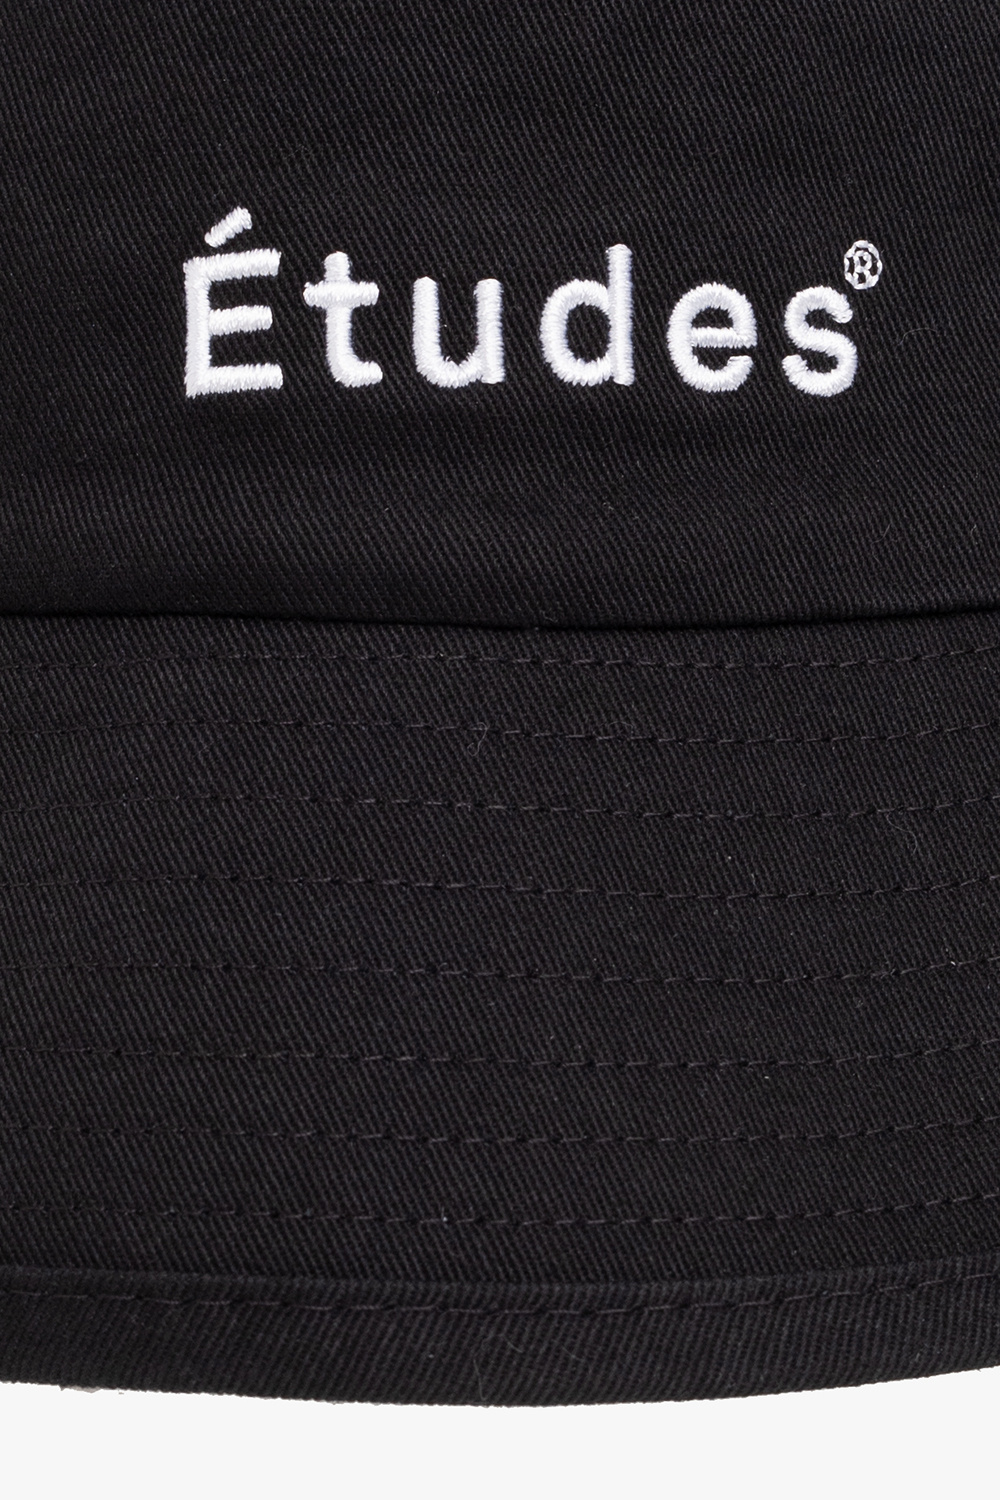 Etudes hat Grey 45 footwear Kids Sweatpants